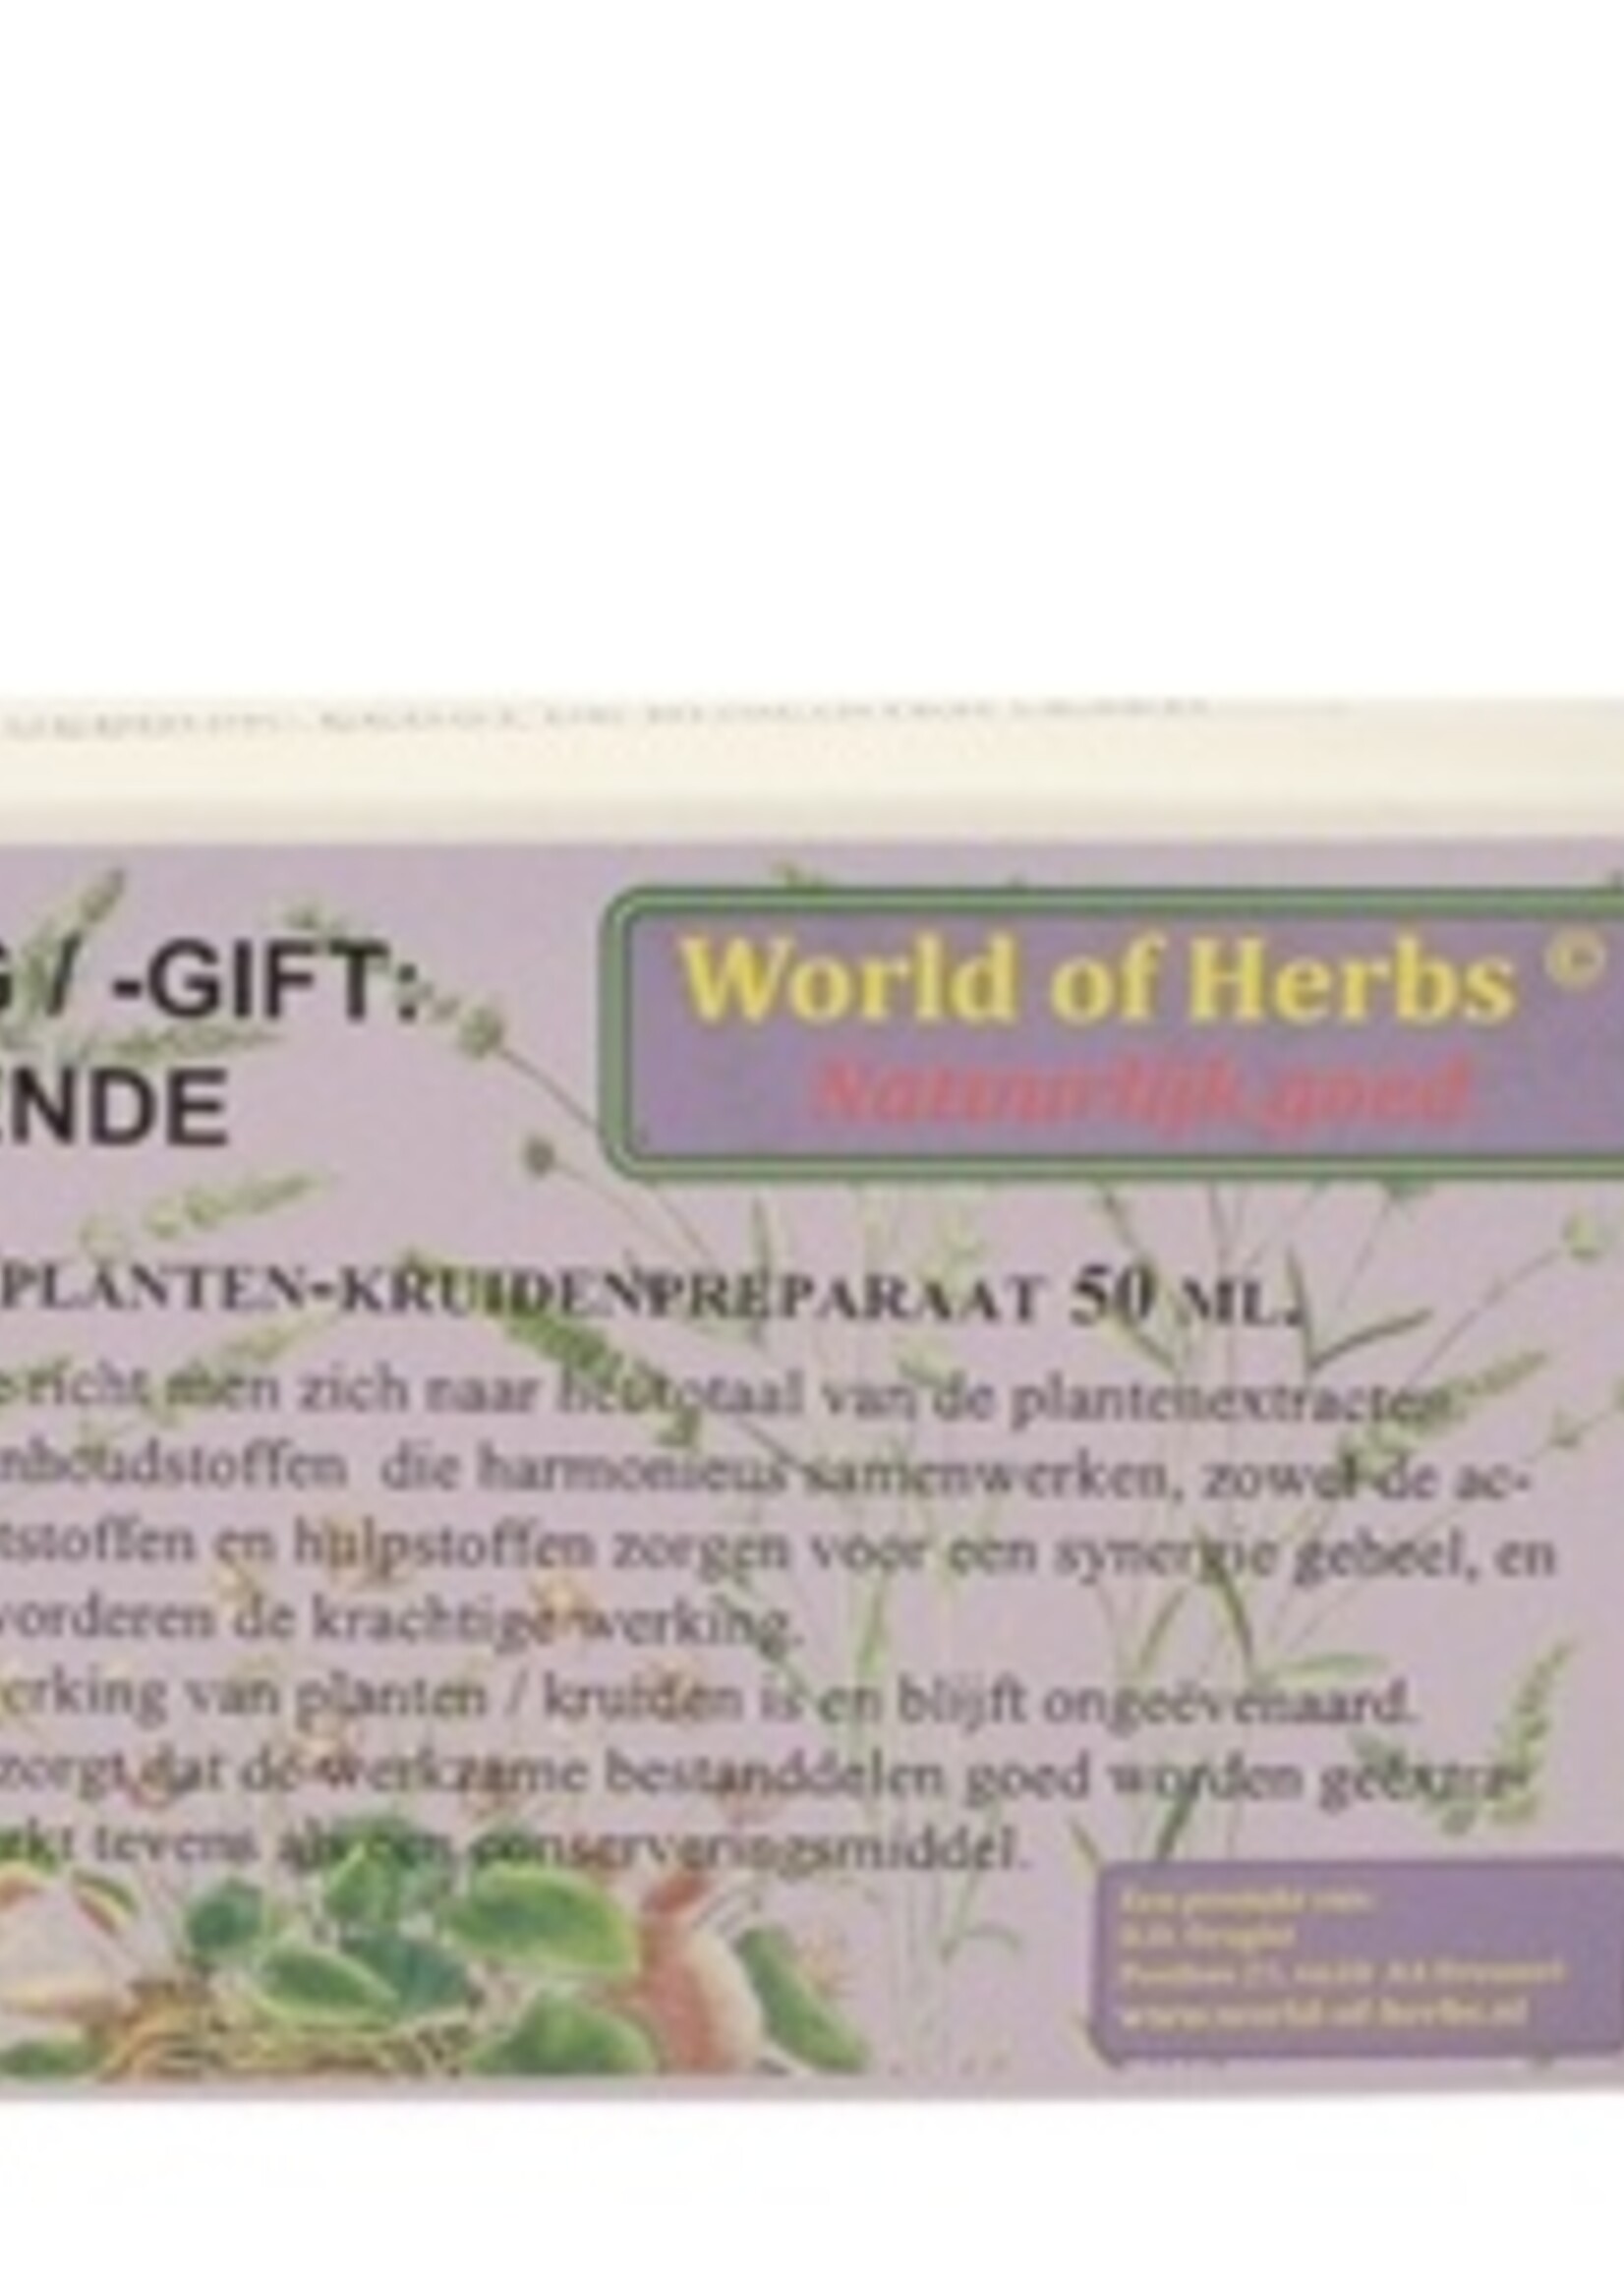 World of herbs World of herbs fytotherapie onvoldoende melkvorming /-gift